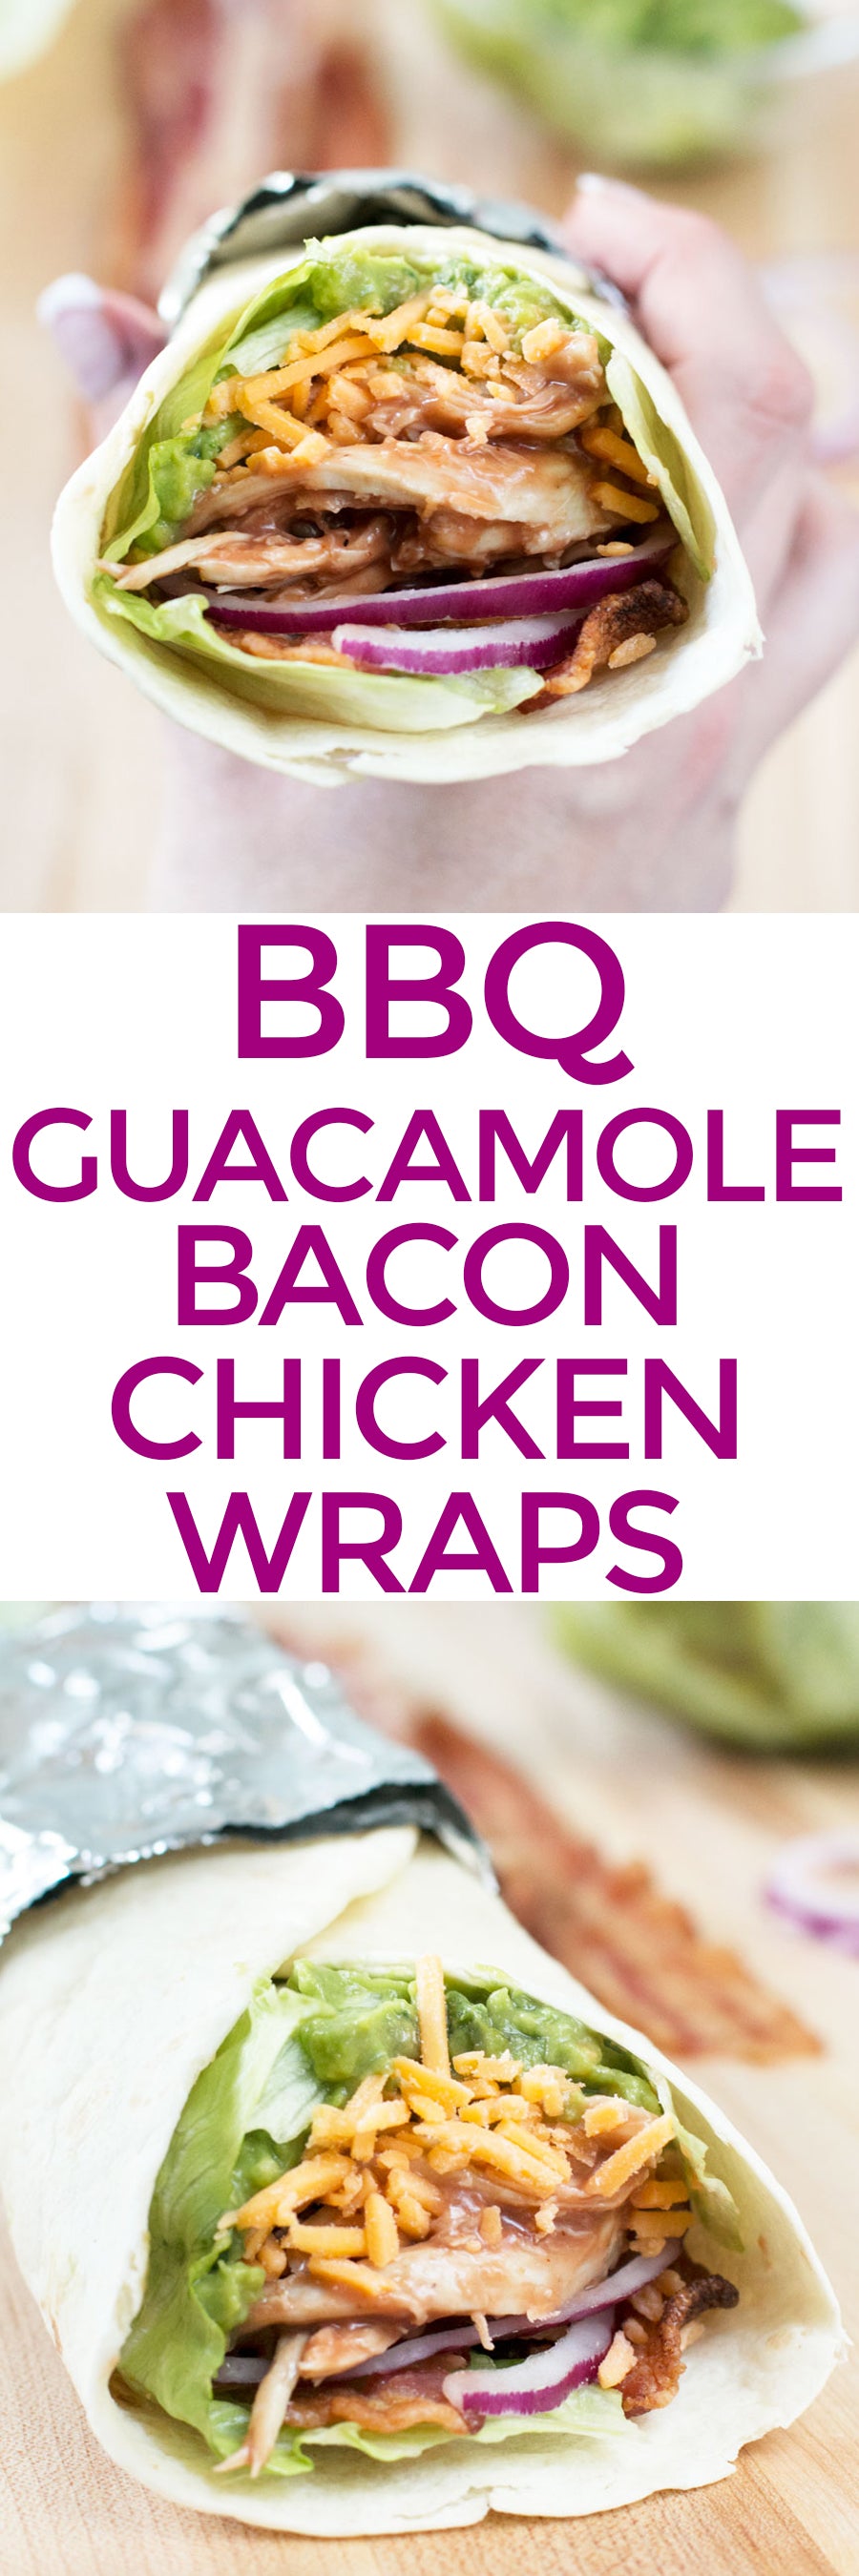 BBQ Guacamole Bacon Chicken Wraps | pigofthemonth.com #bbq #barbecue #bacon #recipe #lunch